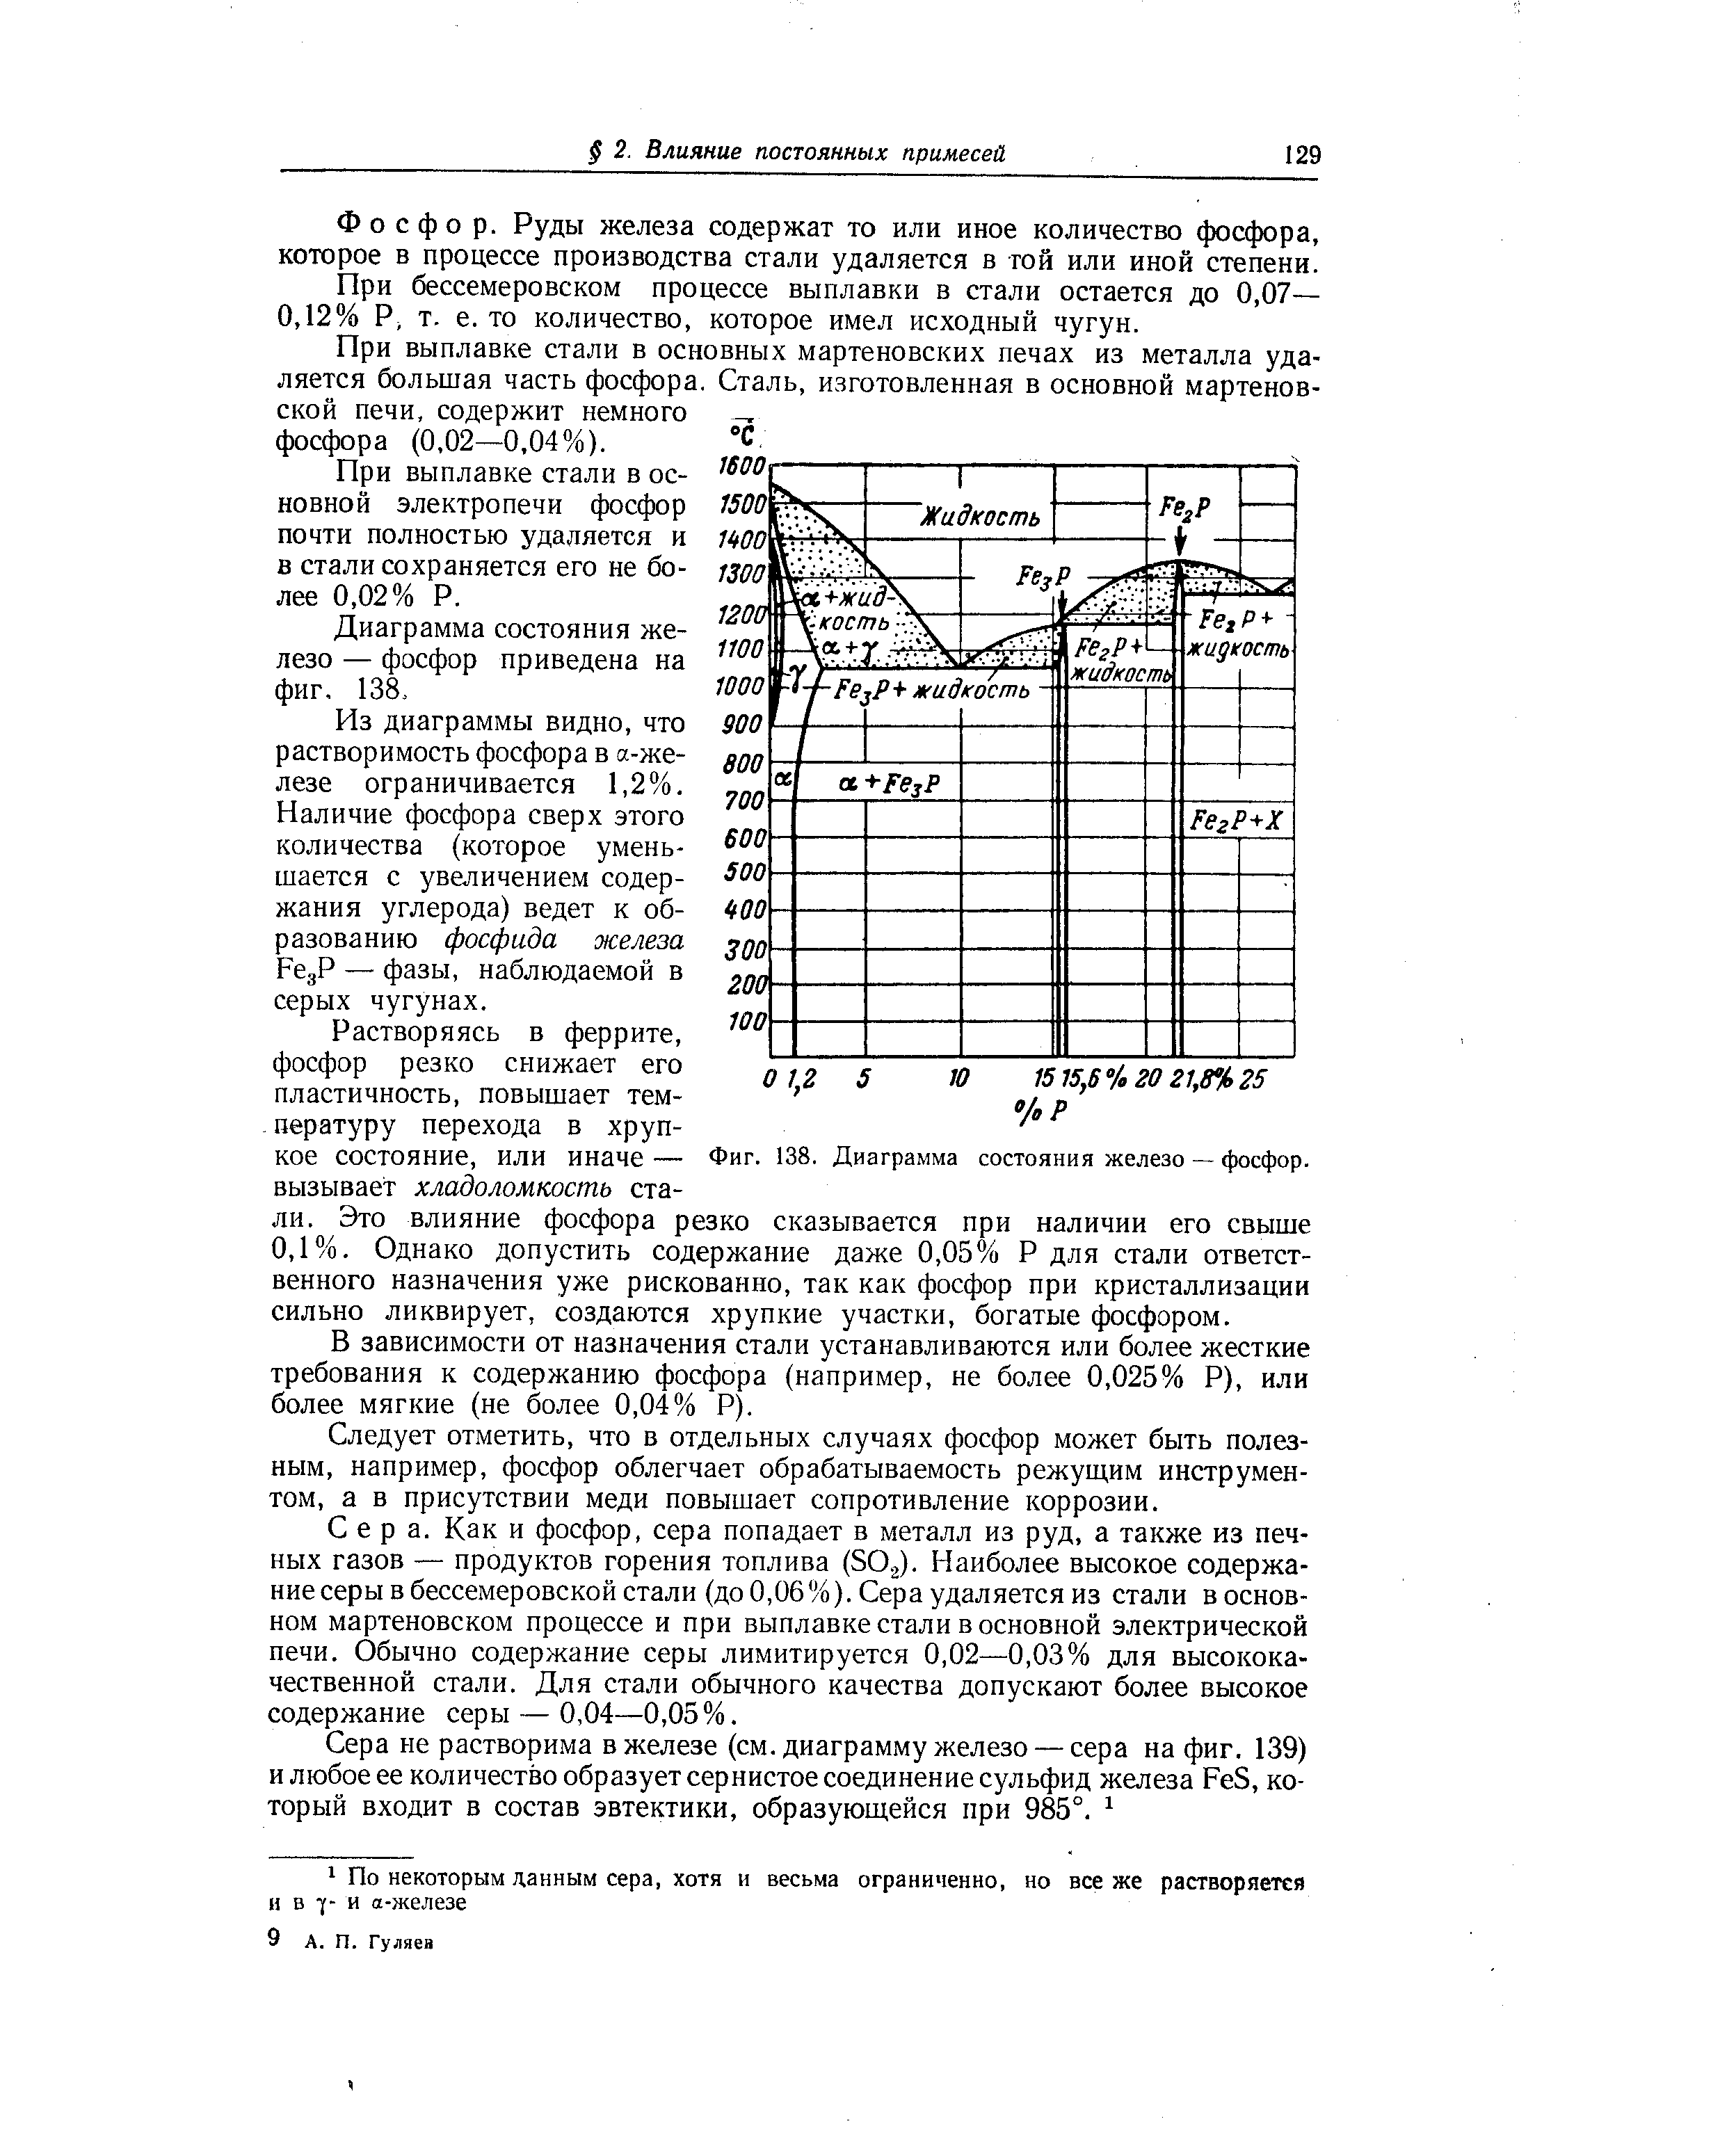 Фиг. 138. <a href="/info/130808">Диаграмма состояния железо</a> — фосфор.
